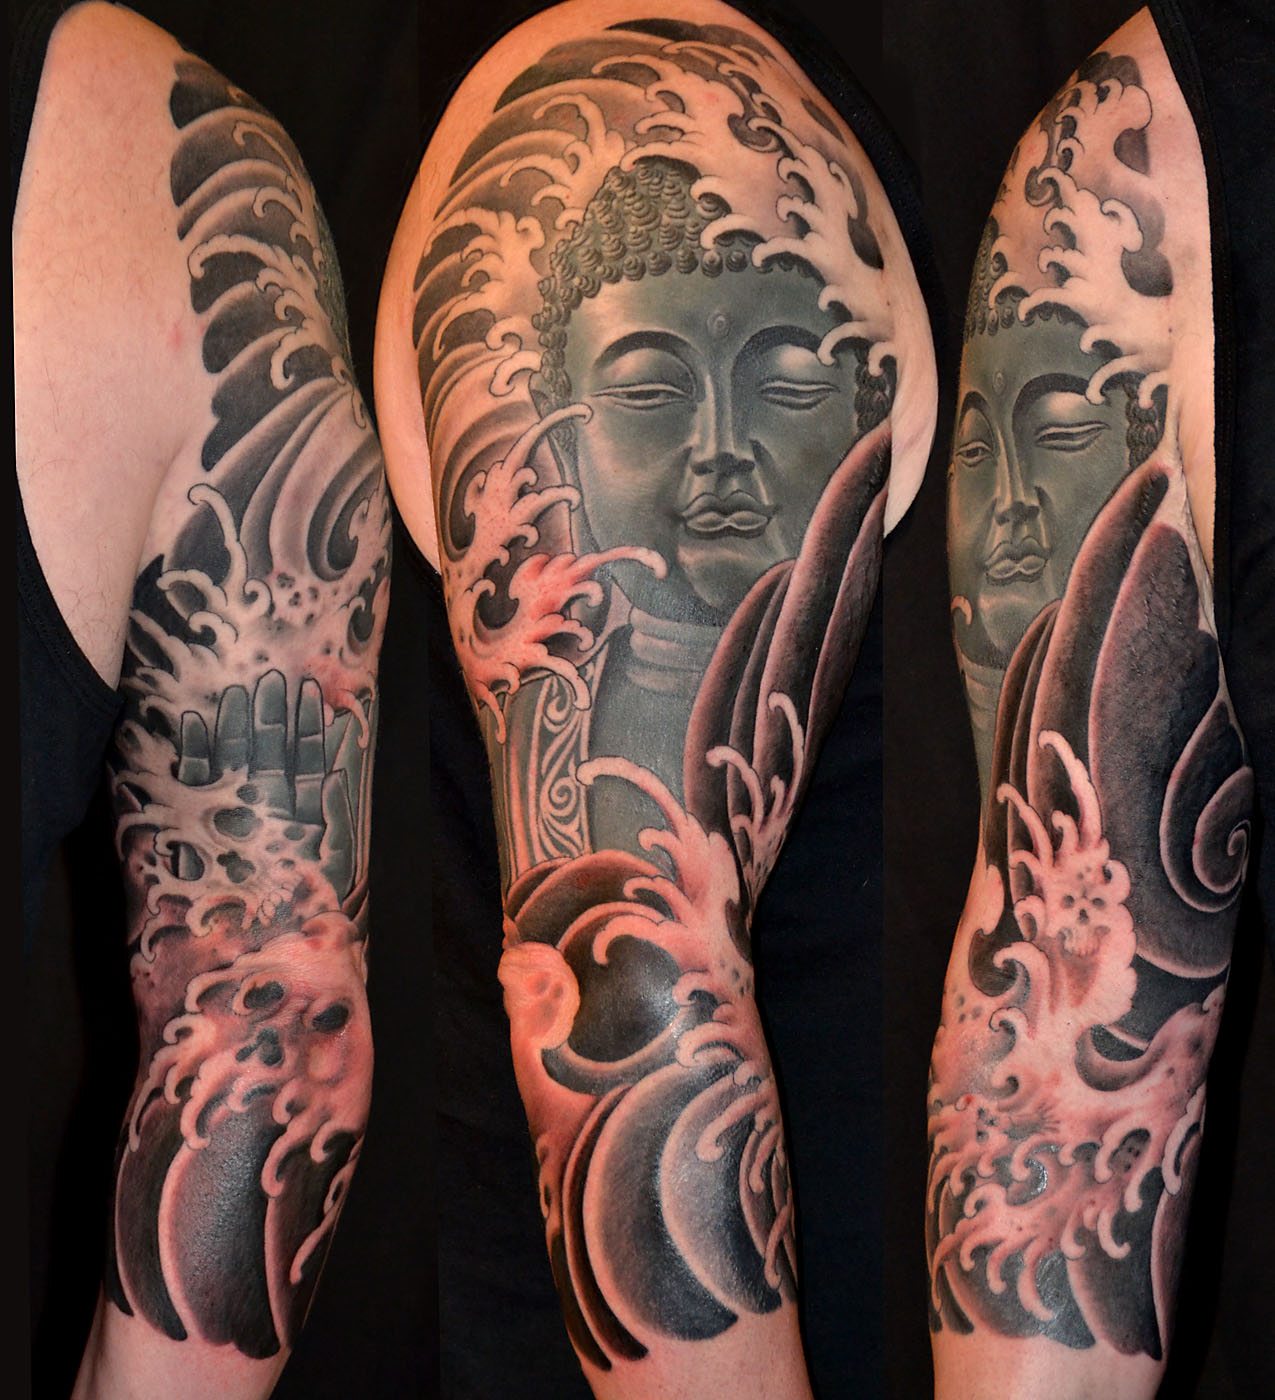 Japanese Religious/Spiritual Sleeve Tattoo